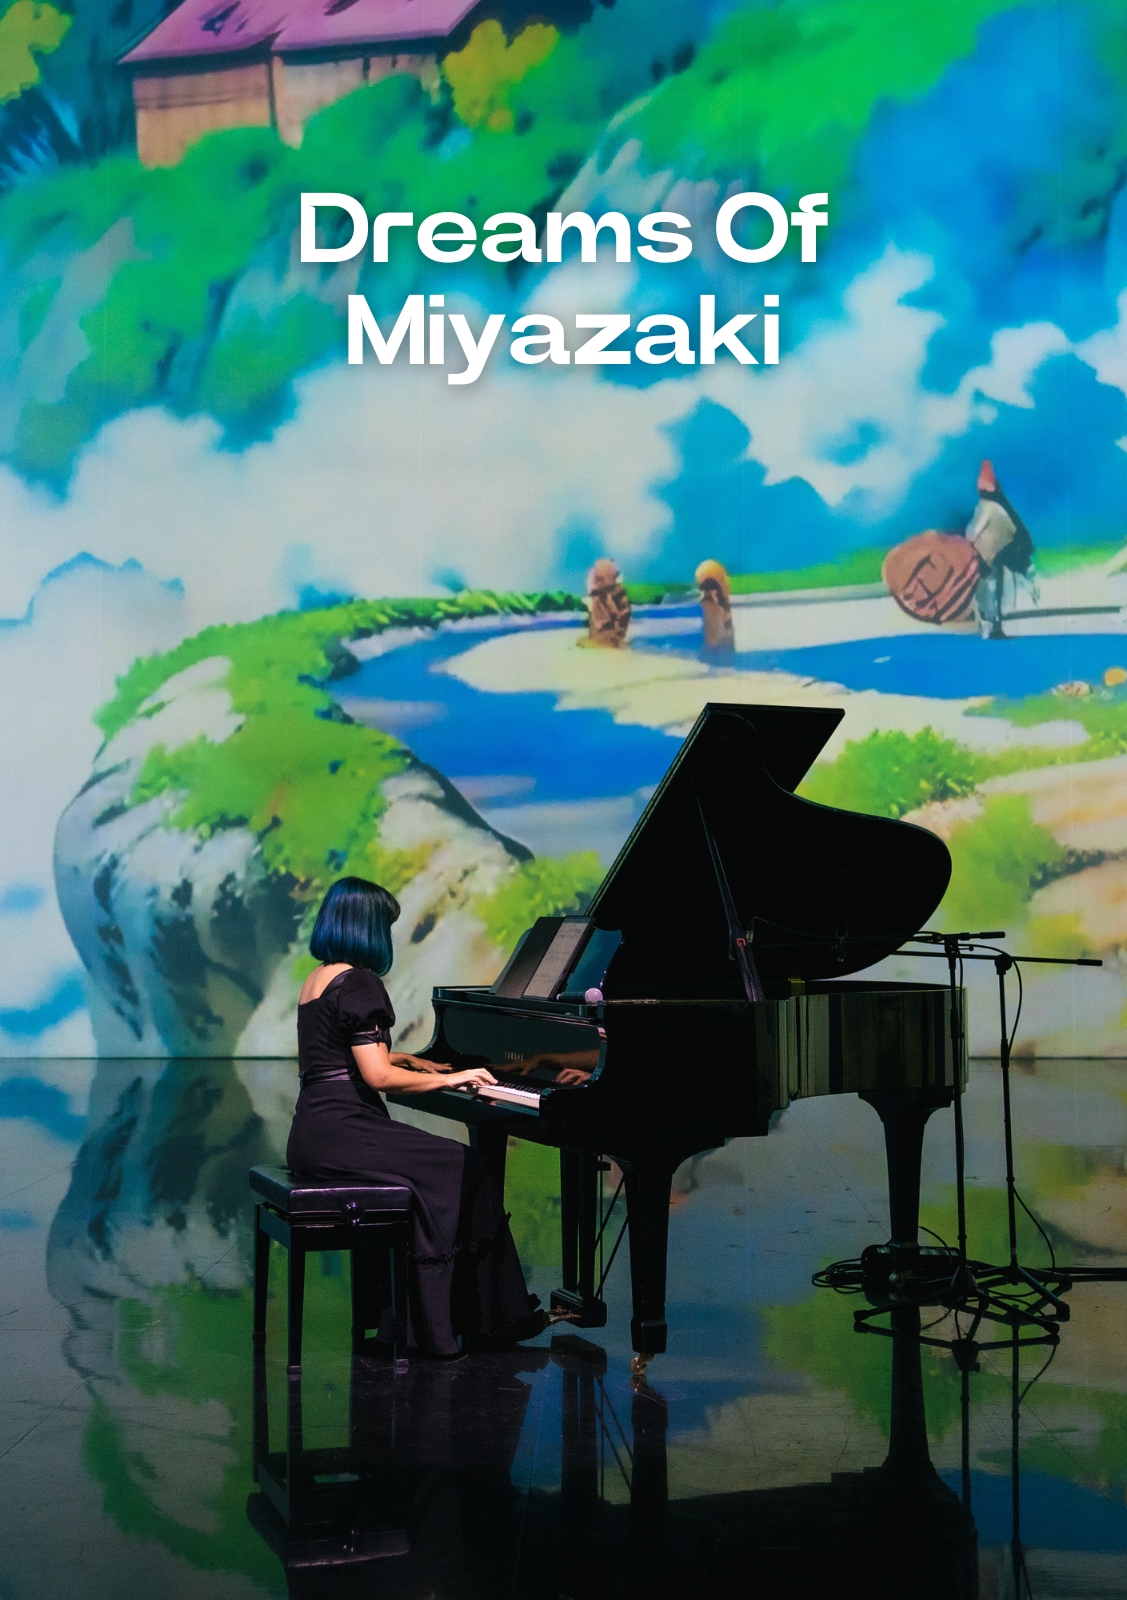 Dreams of Miyazaki